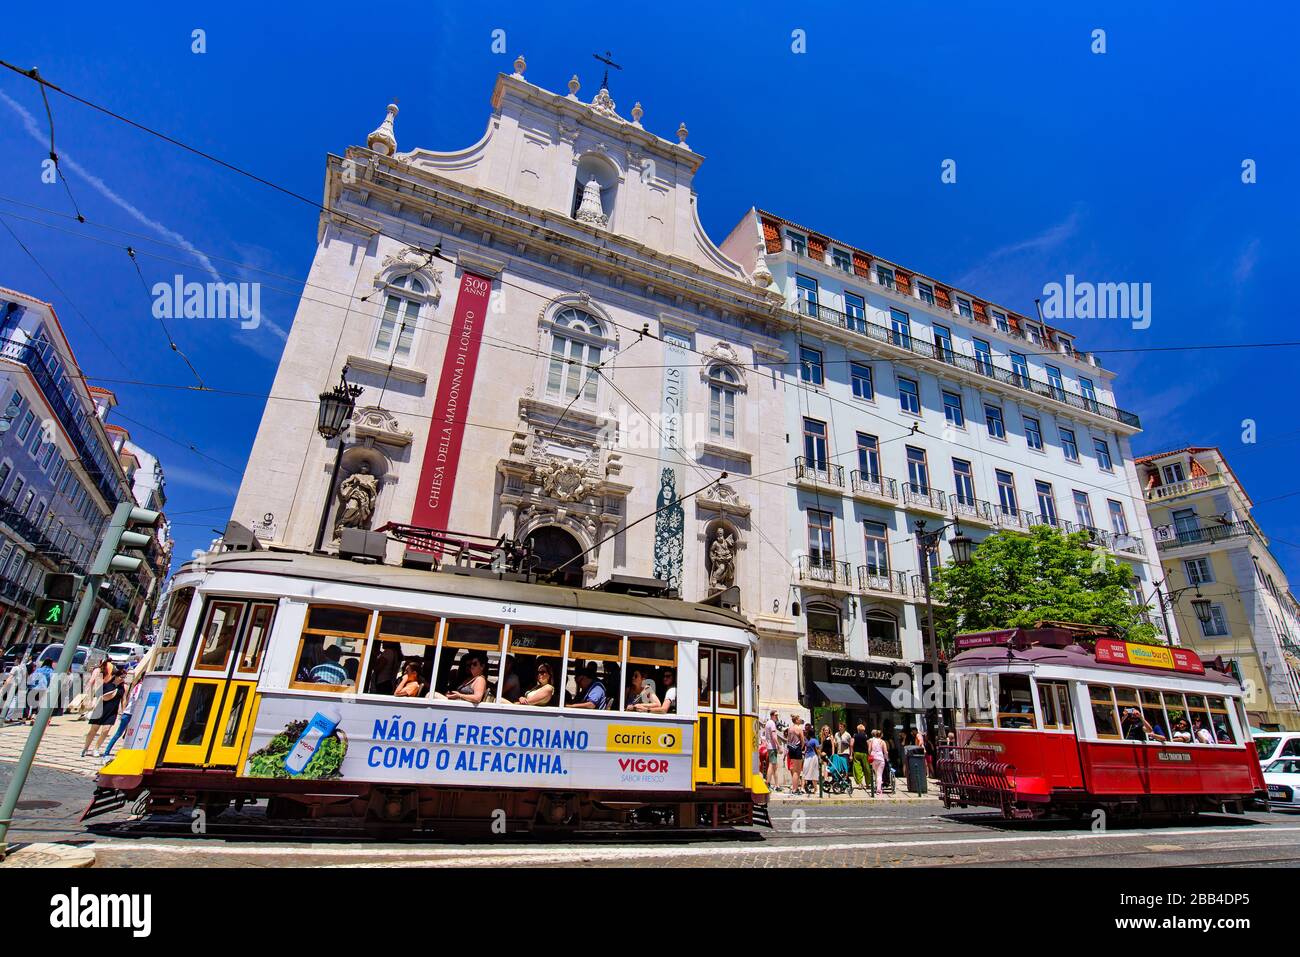 Tram running on the street in Lisbon, Portugal Stock Photo